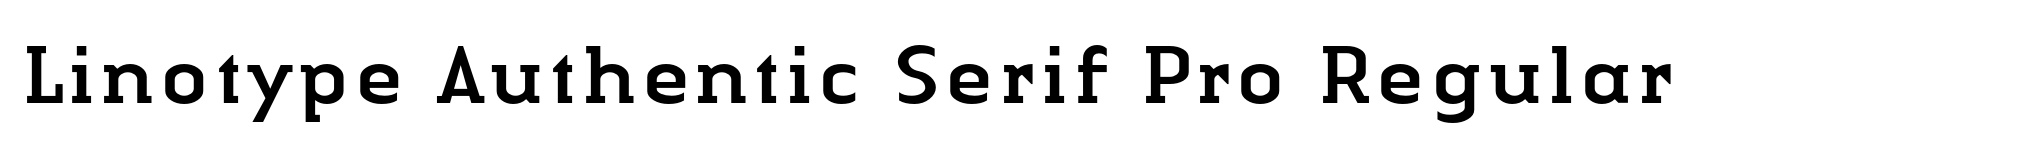 Linotype Authentic Serif Pro Regular image